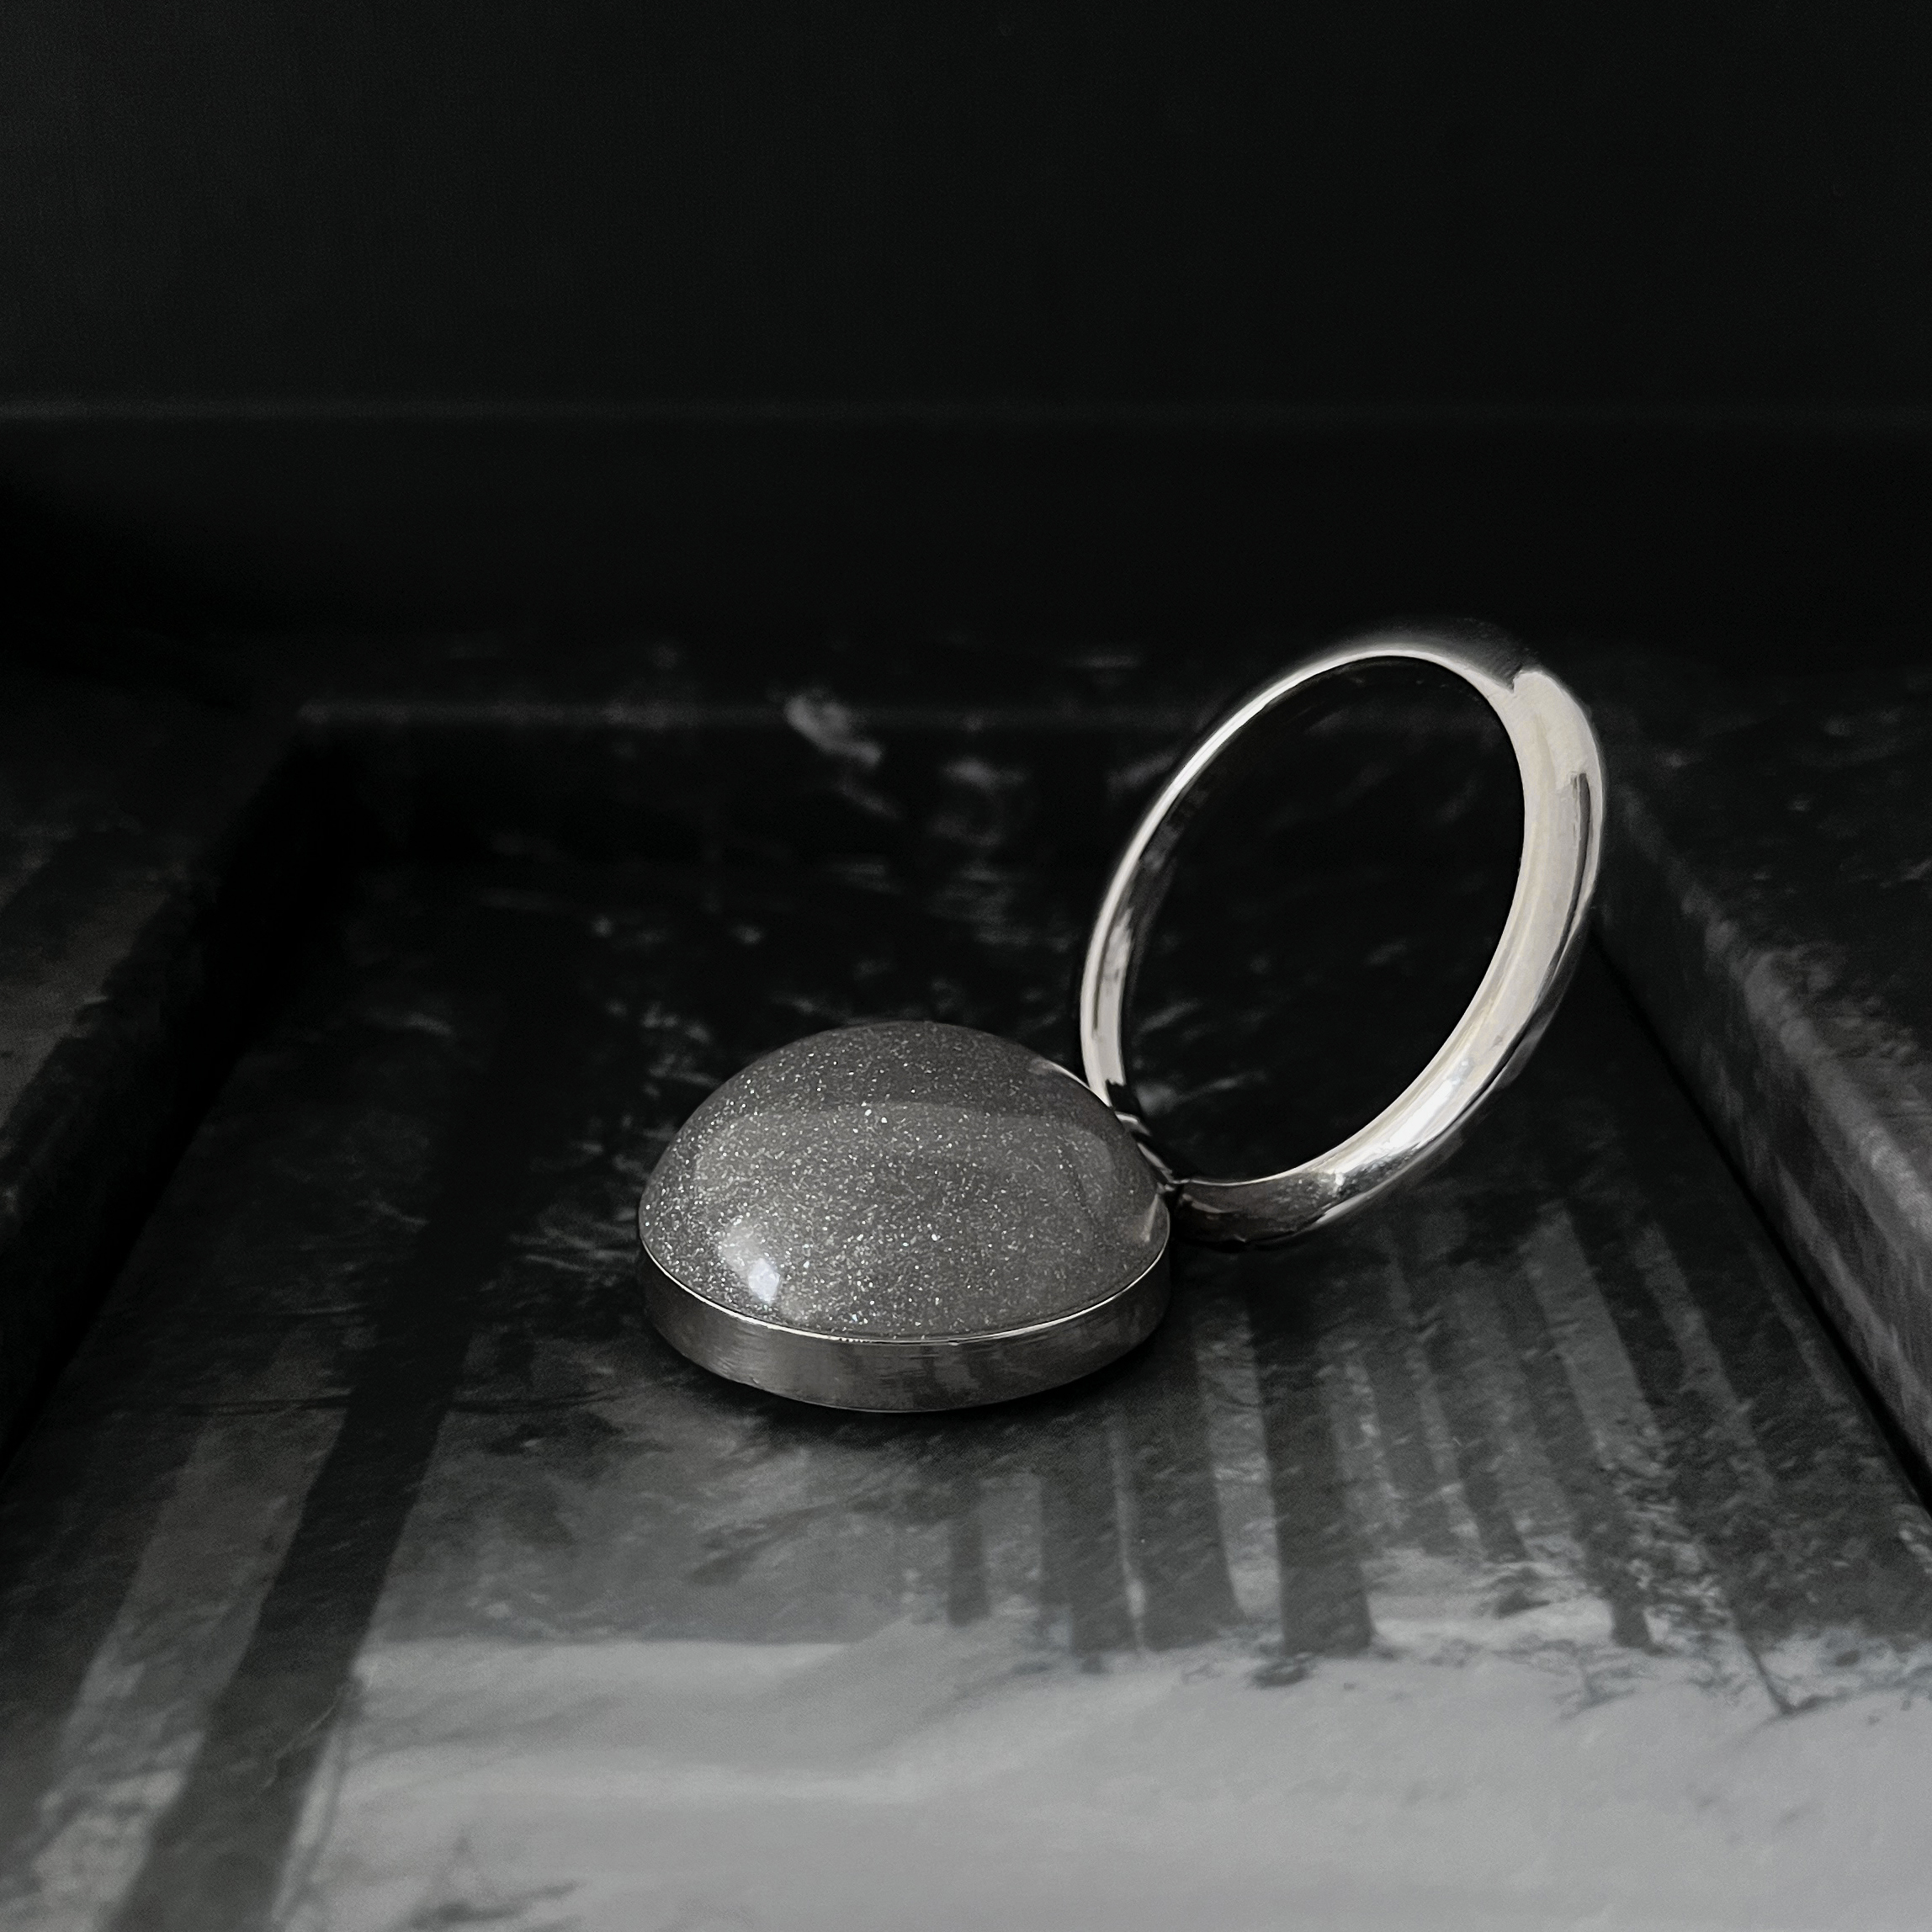 Pearl Grey Ring